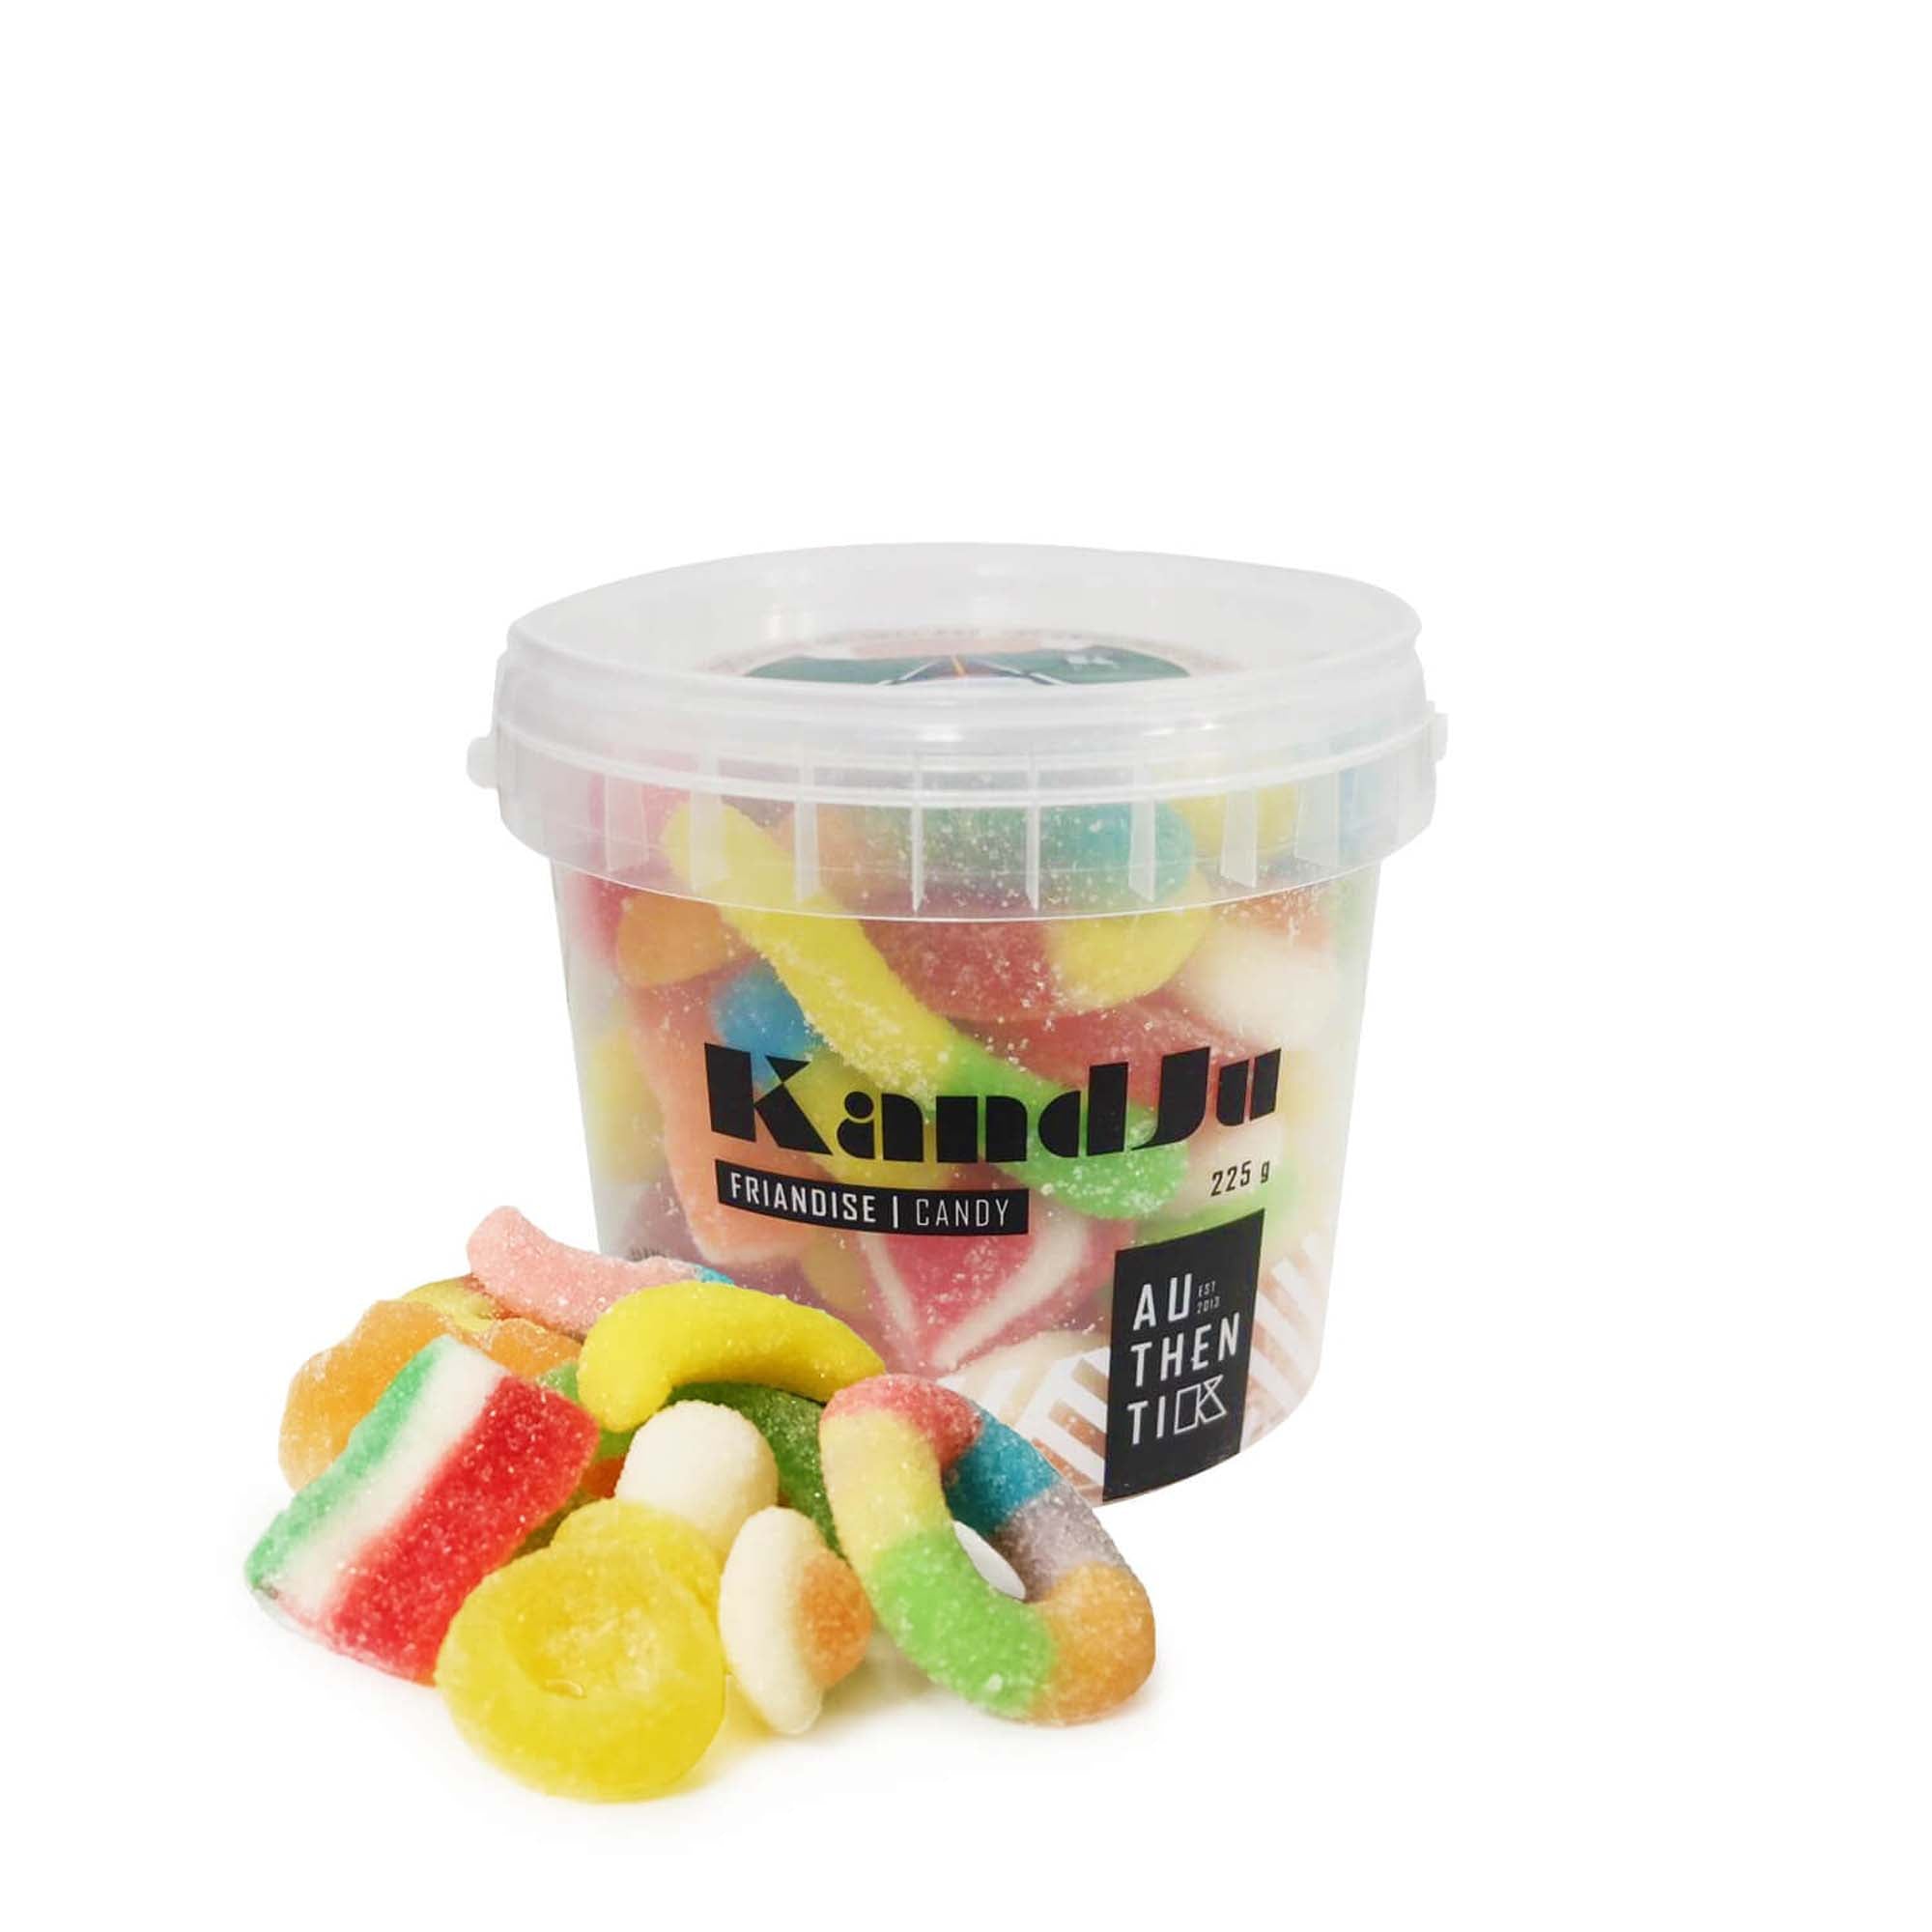 KandJu Sanded Mix Candy Bucket, 225g, 1 count